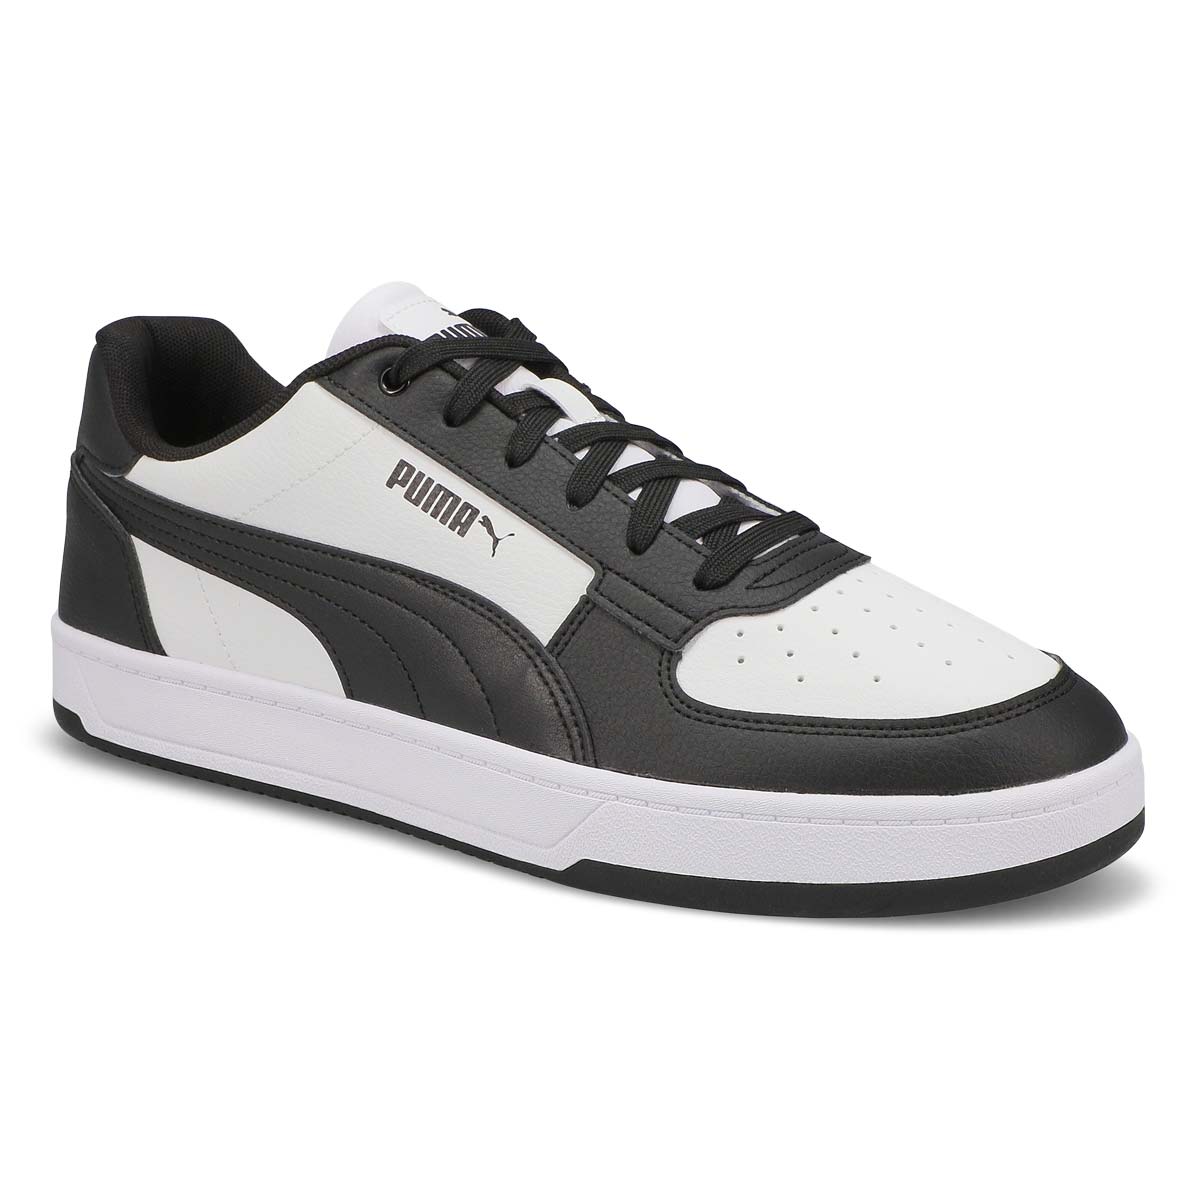 Mens Caven 2.0 Lace Up Sneaker - Black/White